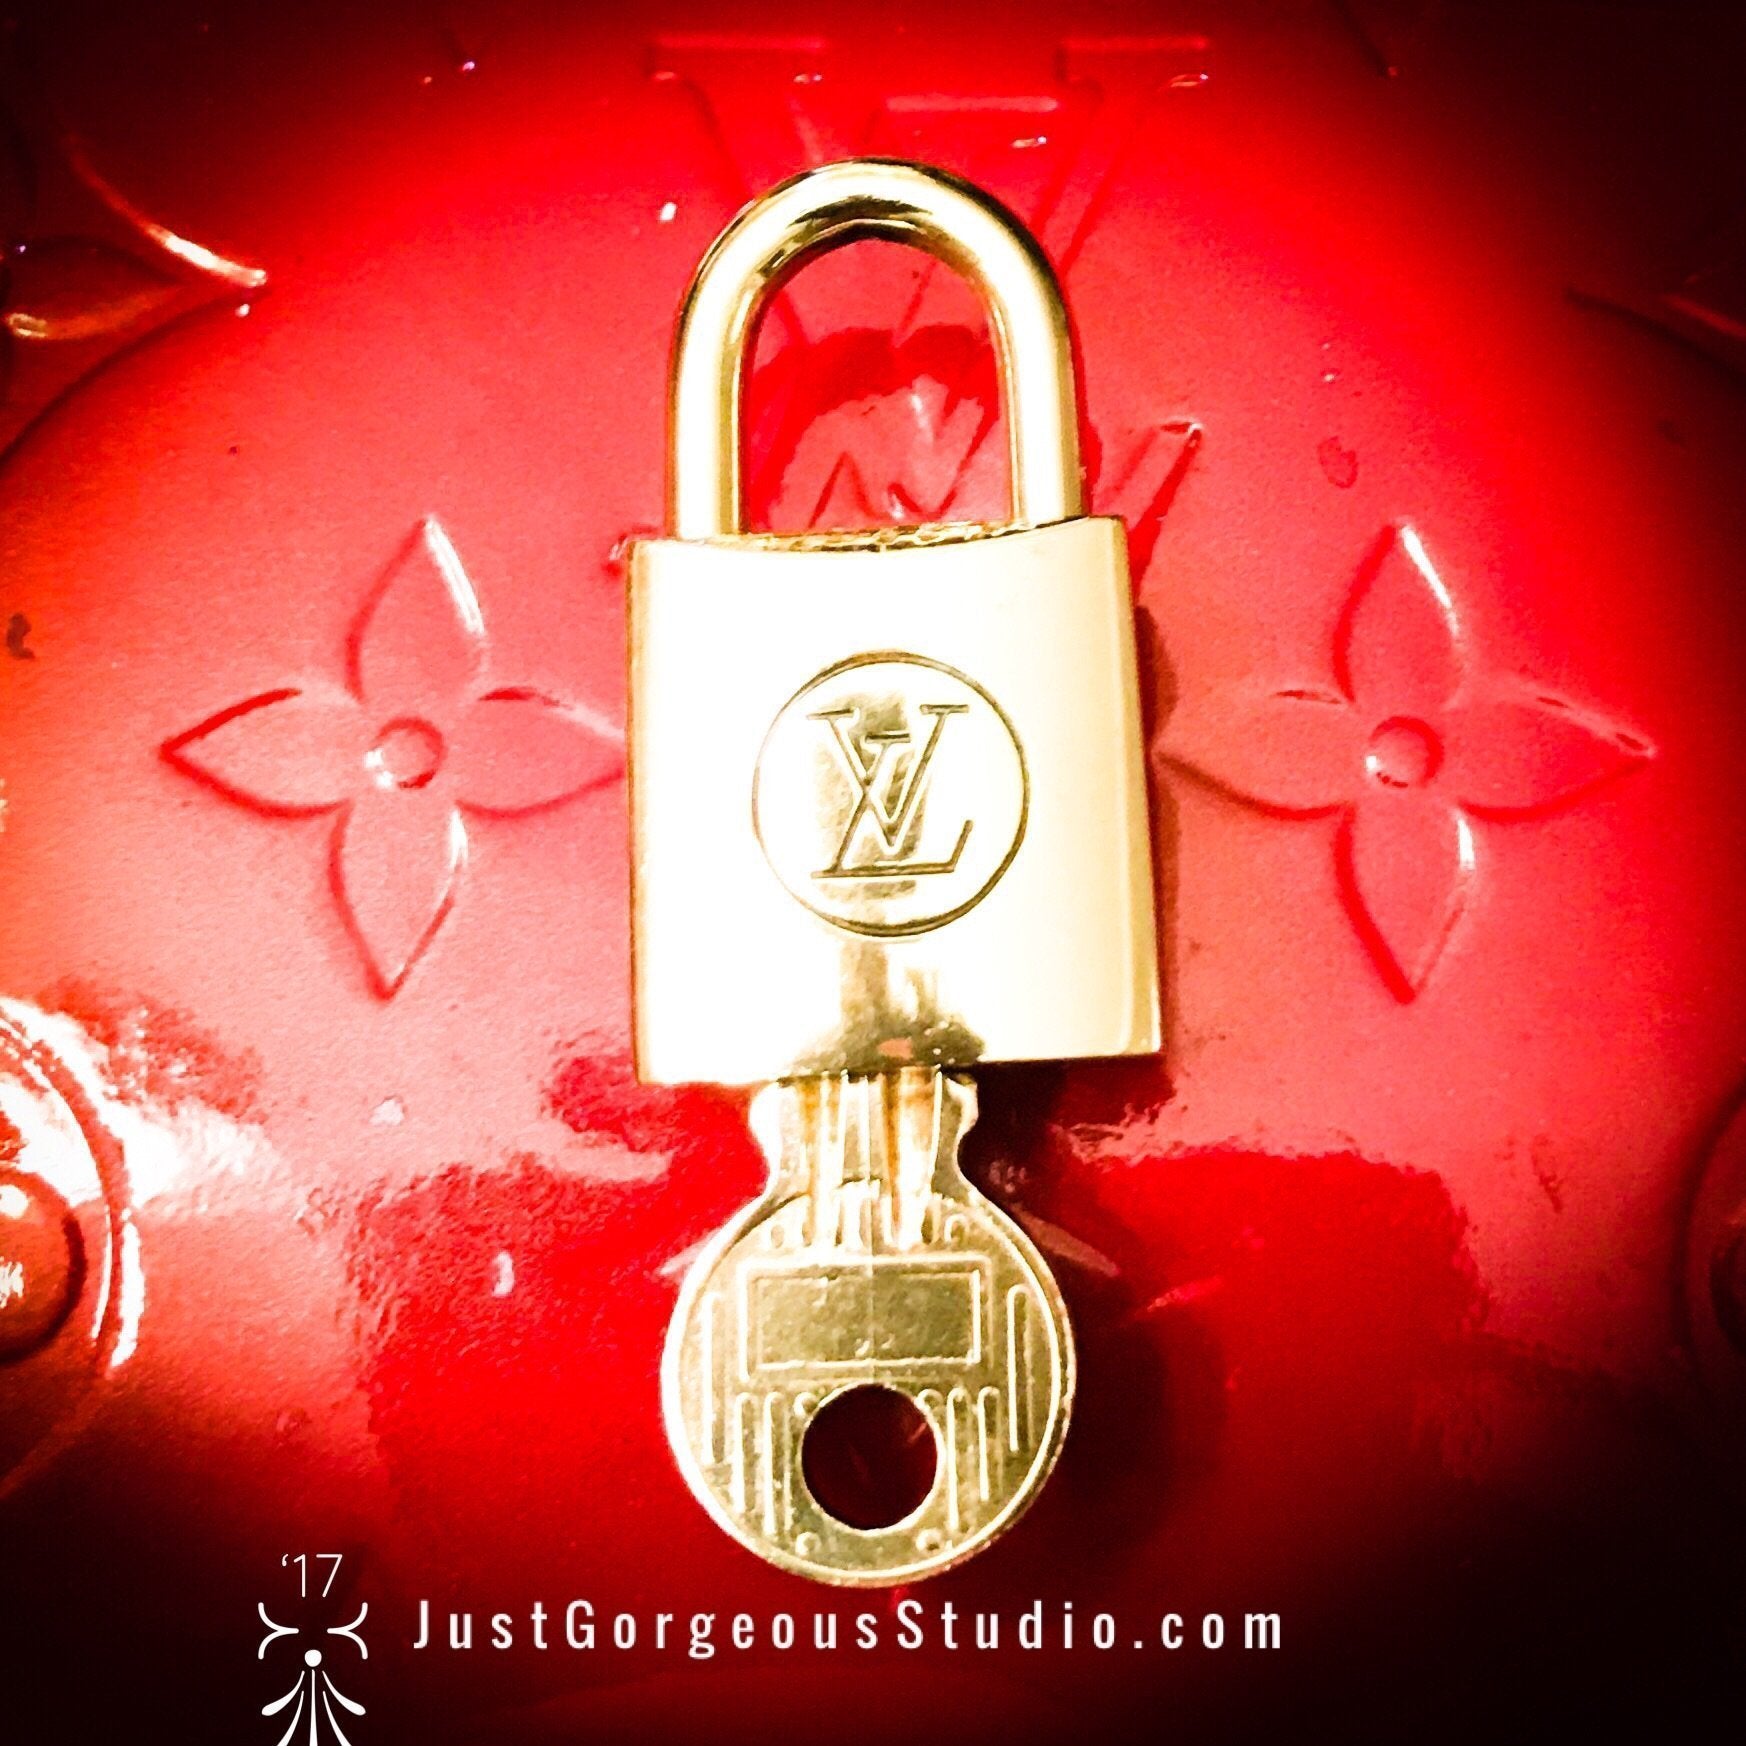 Louis Vuitton Lock + Key Reworked Toggle Closure Necklace – Vanilla Vintage